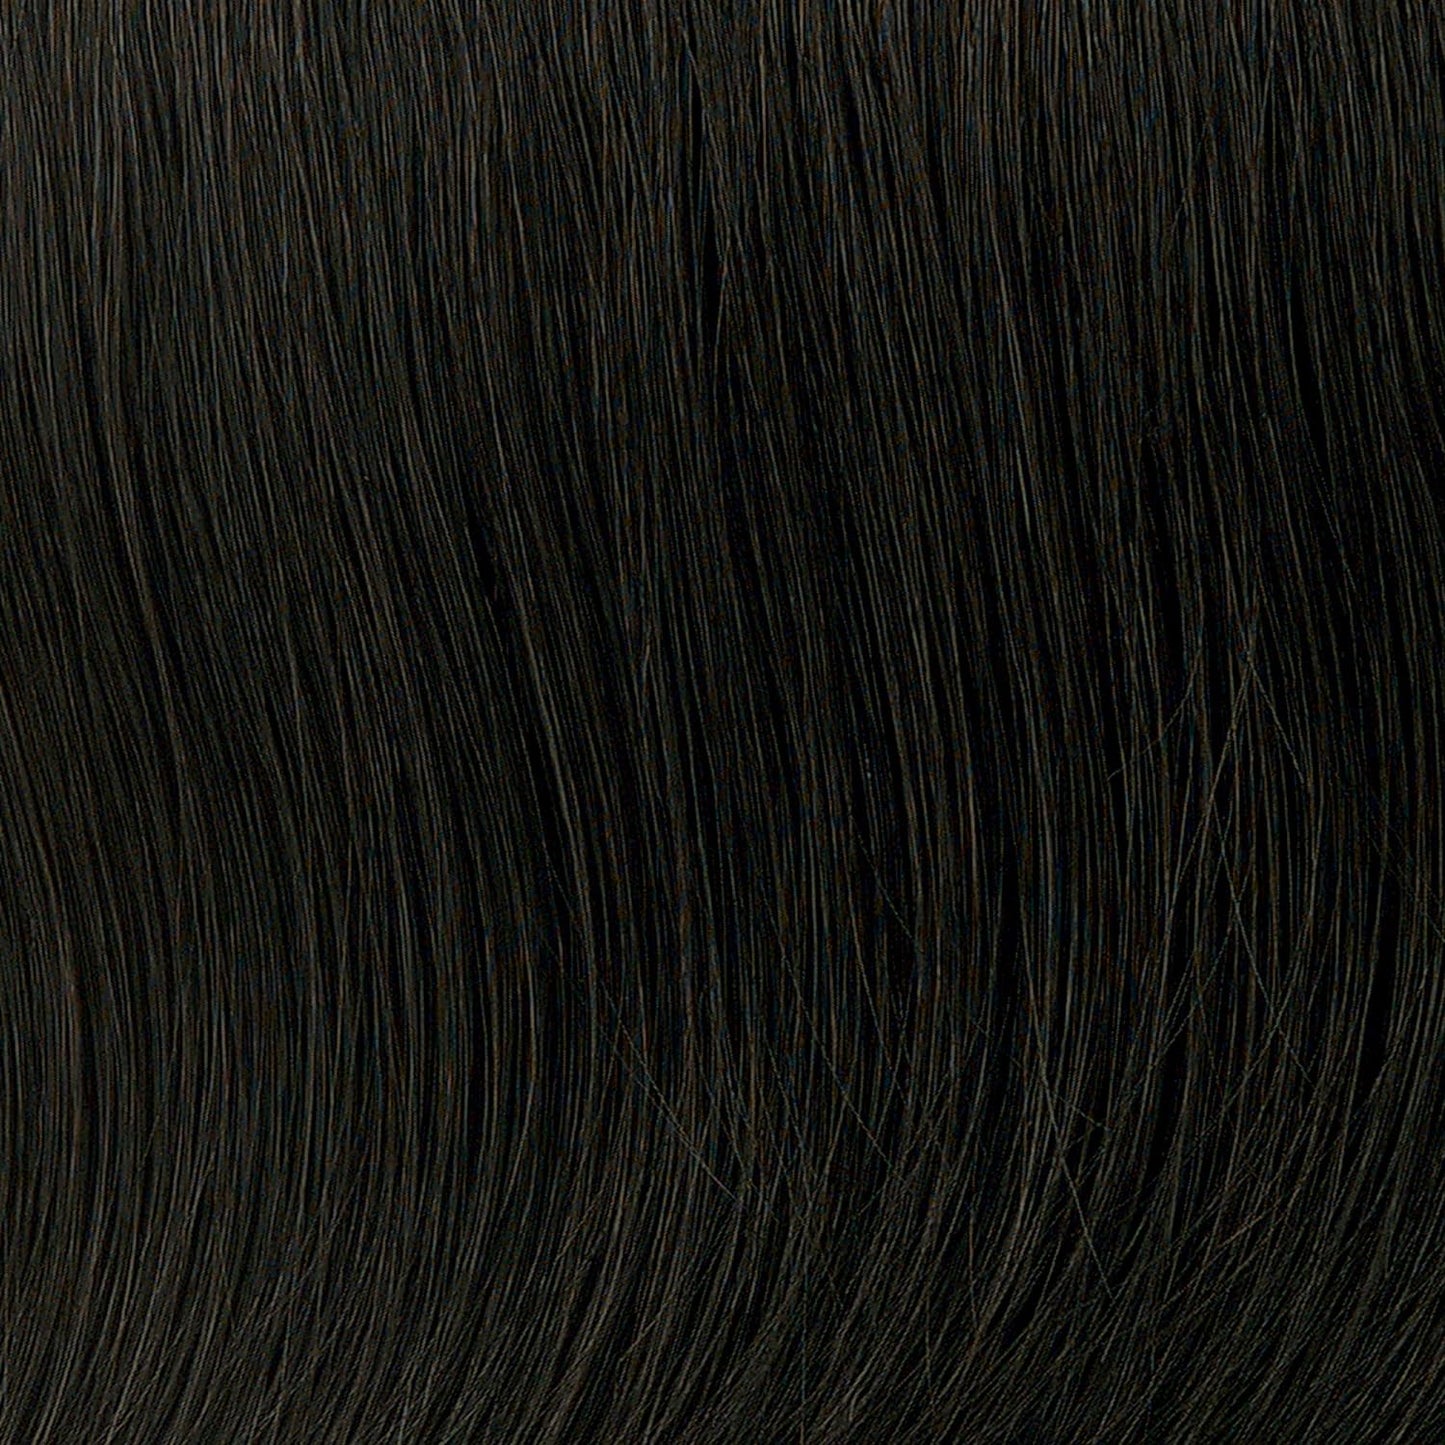 Contemporary Bob HF Regular | Synthetic Wig by Toni Brattin